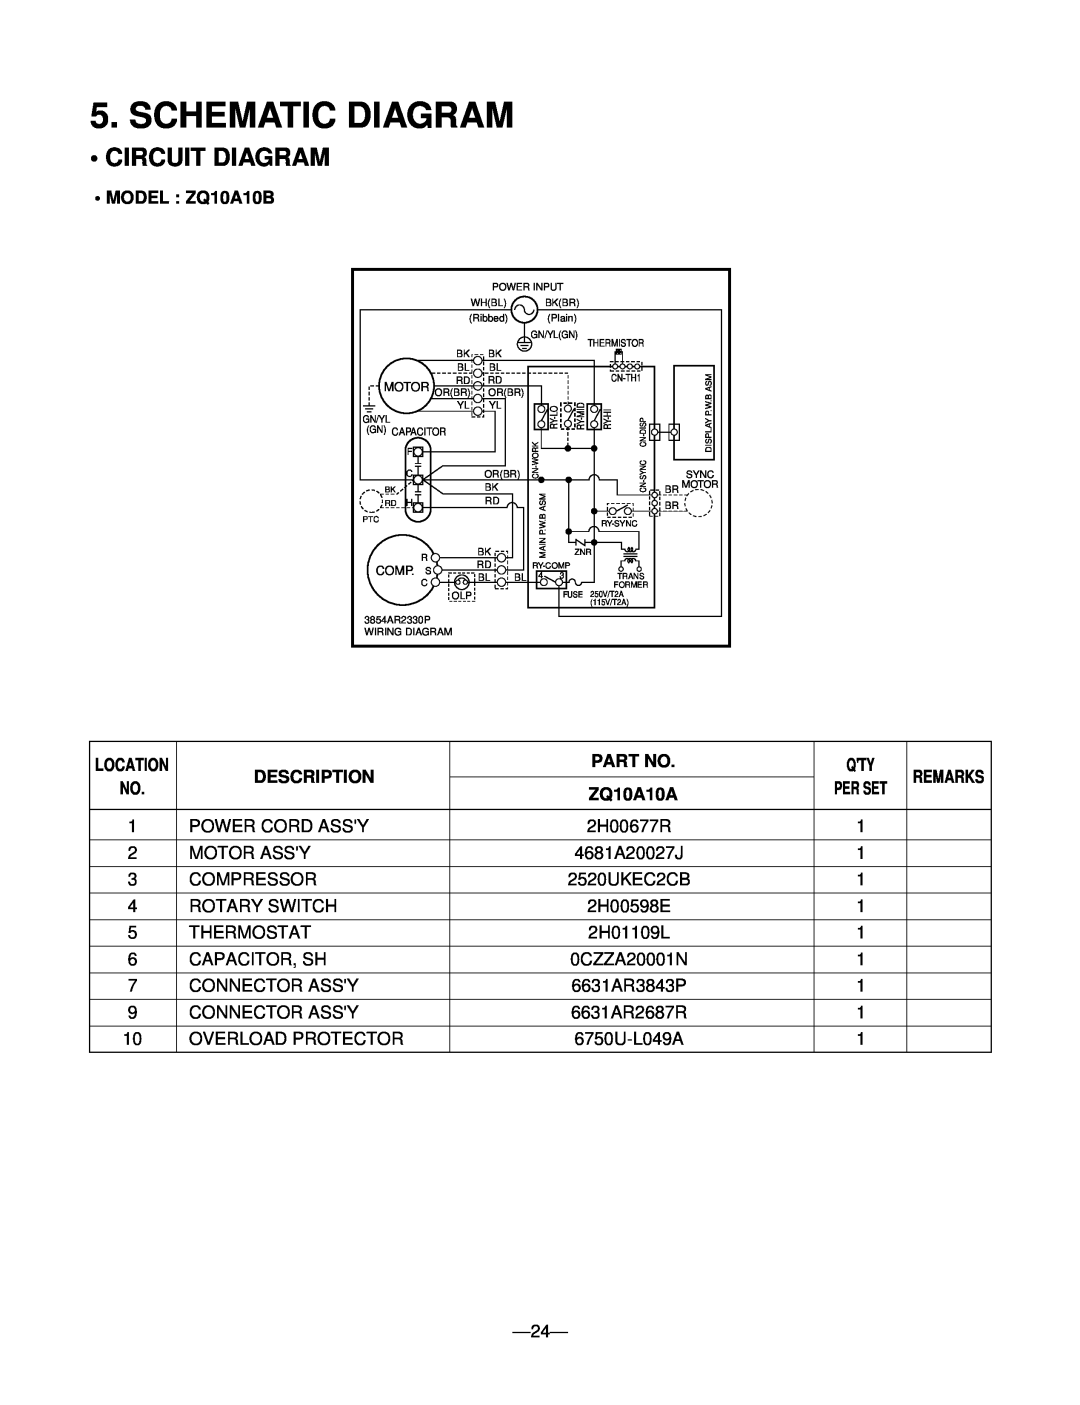 Friedrich ZQ10 A10B manual Schematic Diagram, Circuit Diagram, MODEL ZQ10A10B, Description, ZQ10A10A, Per Set 